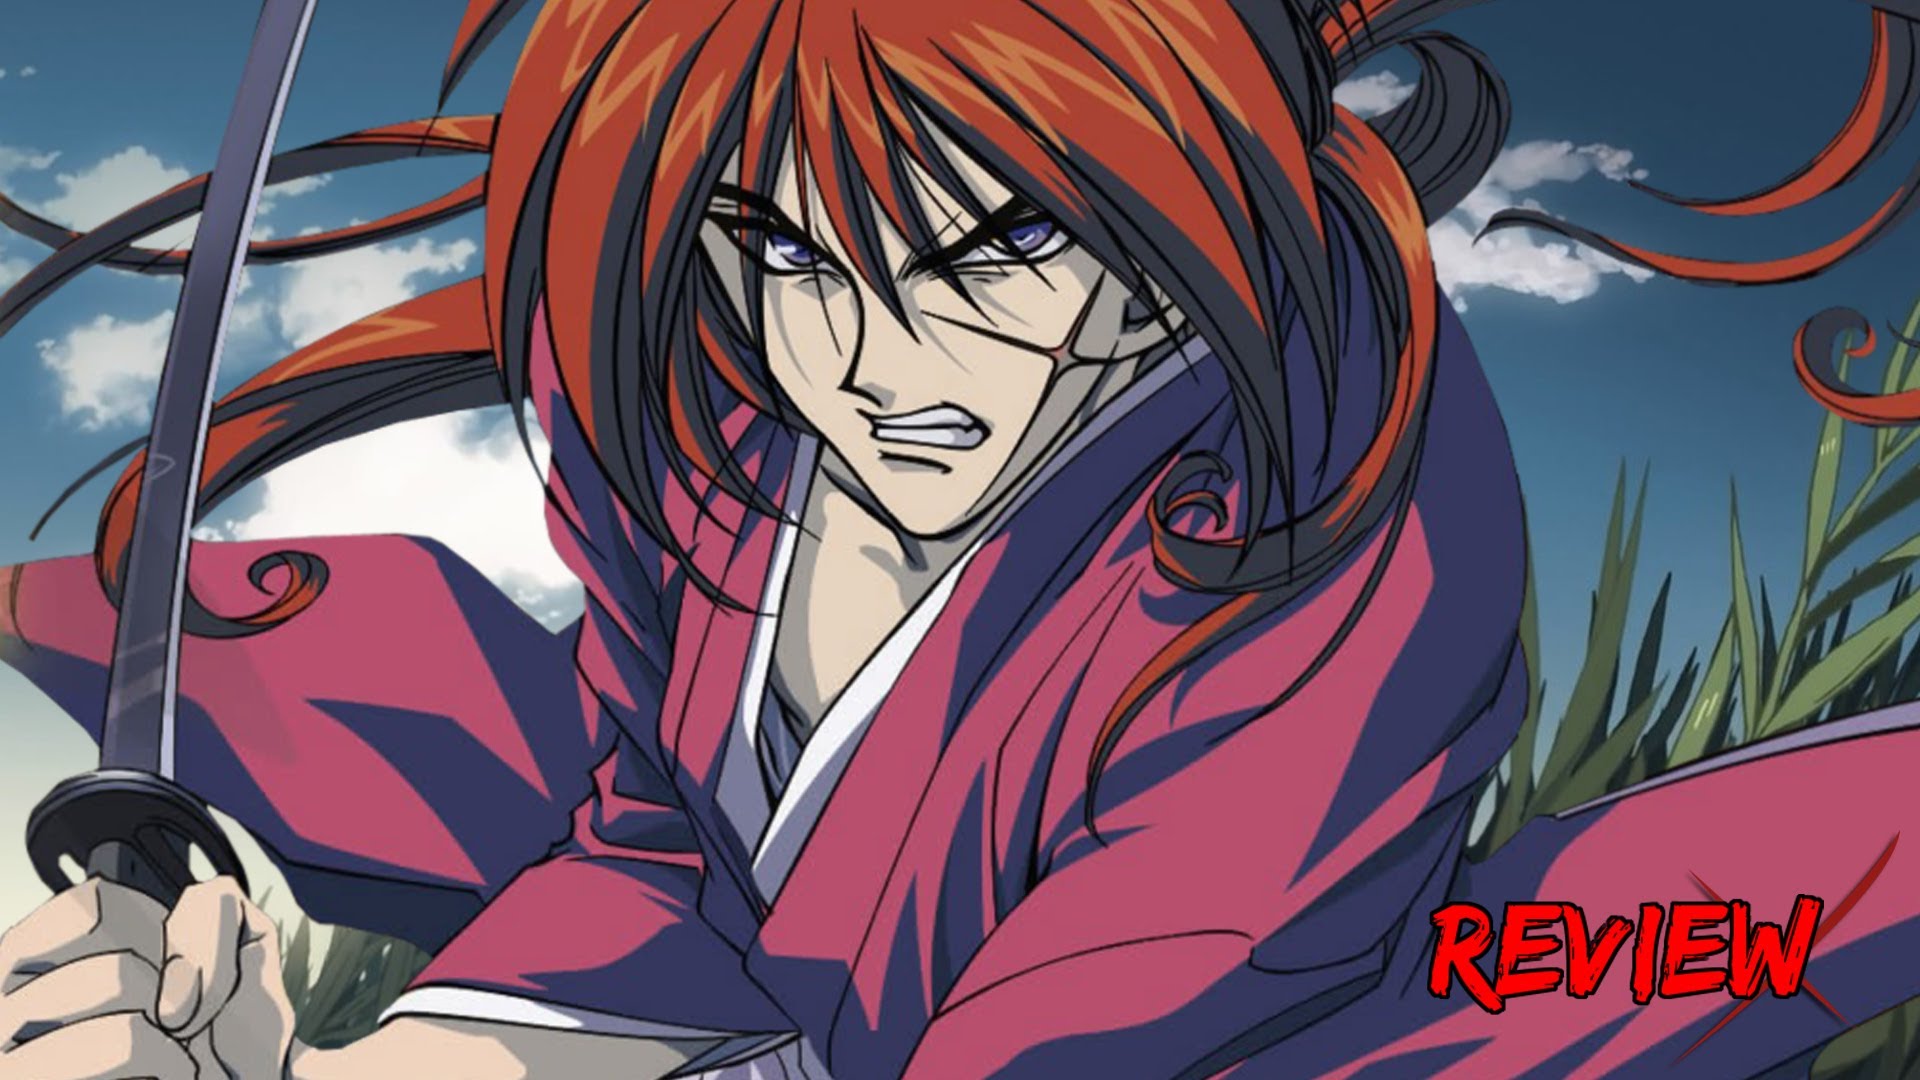 Rurouni Kenshin Anime HD Wallpaper